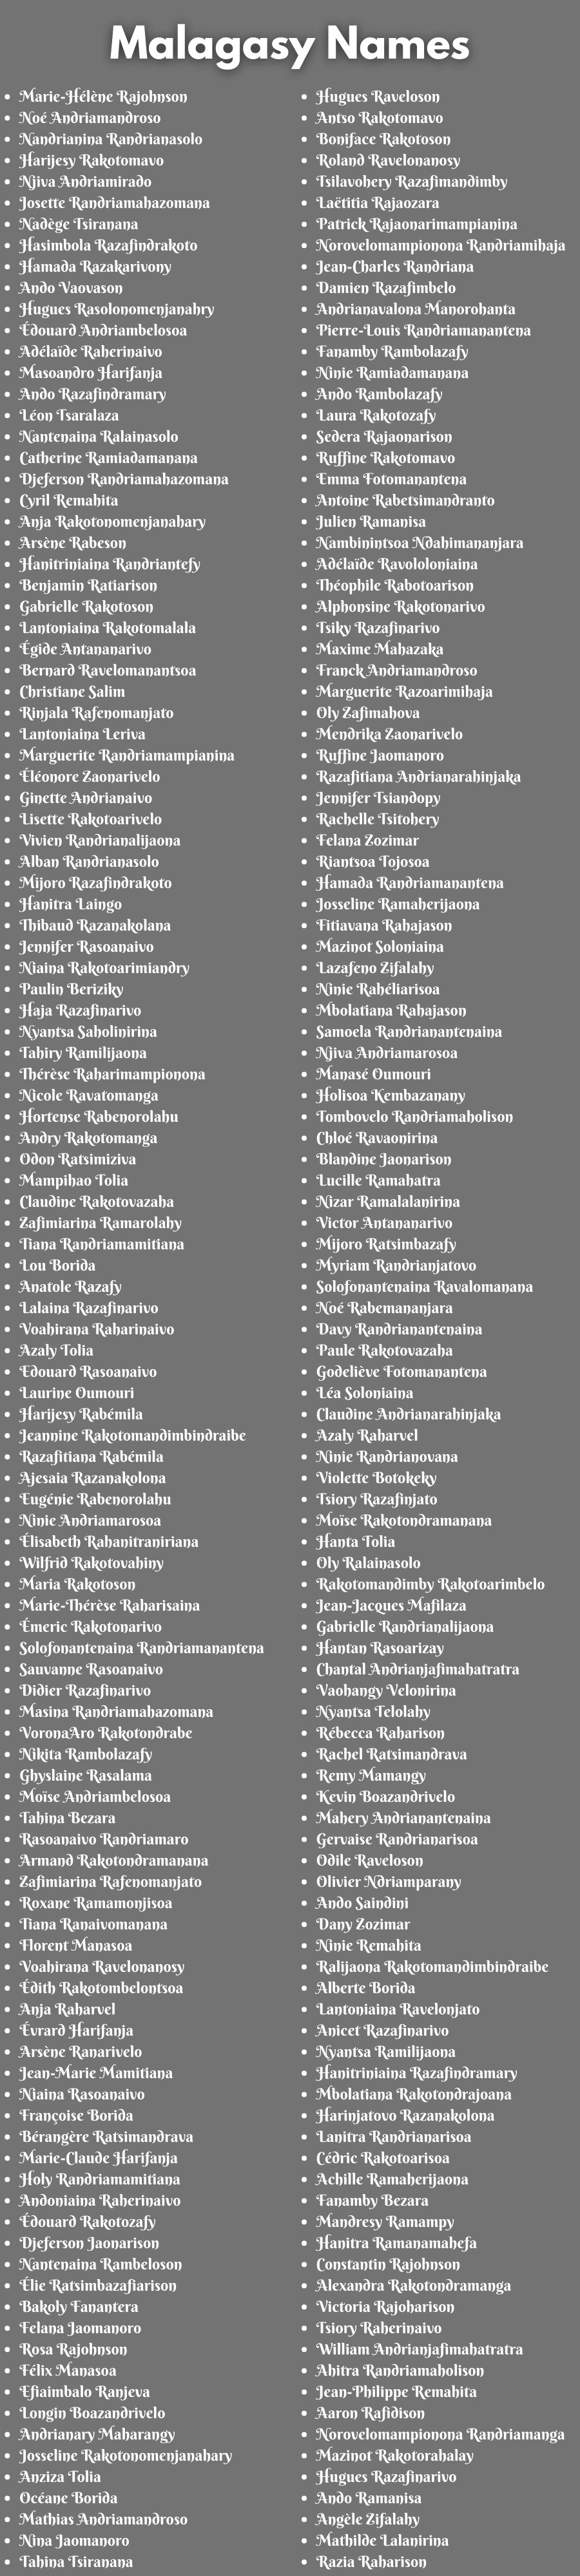 Malagasy Names